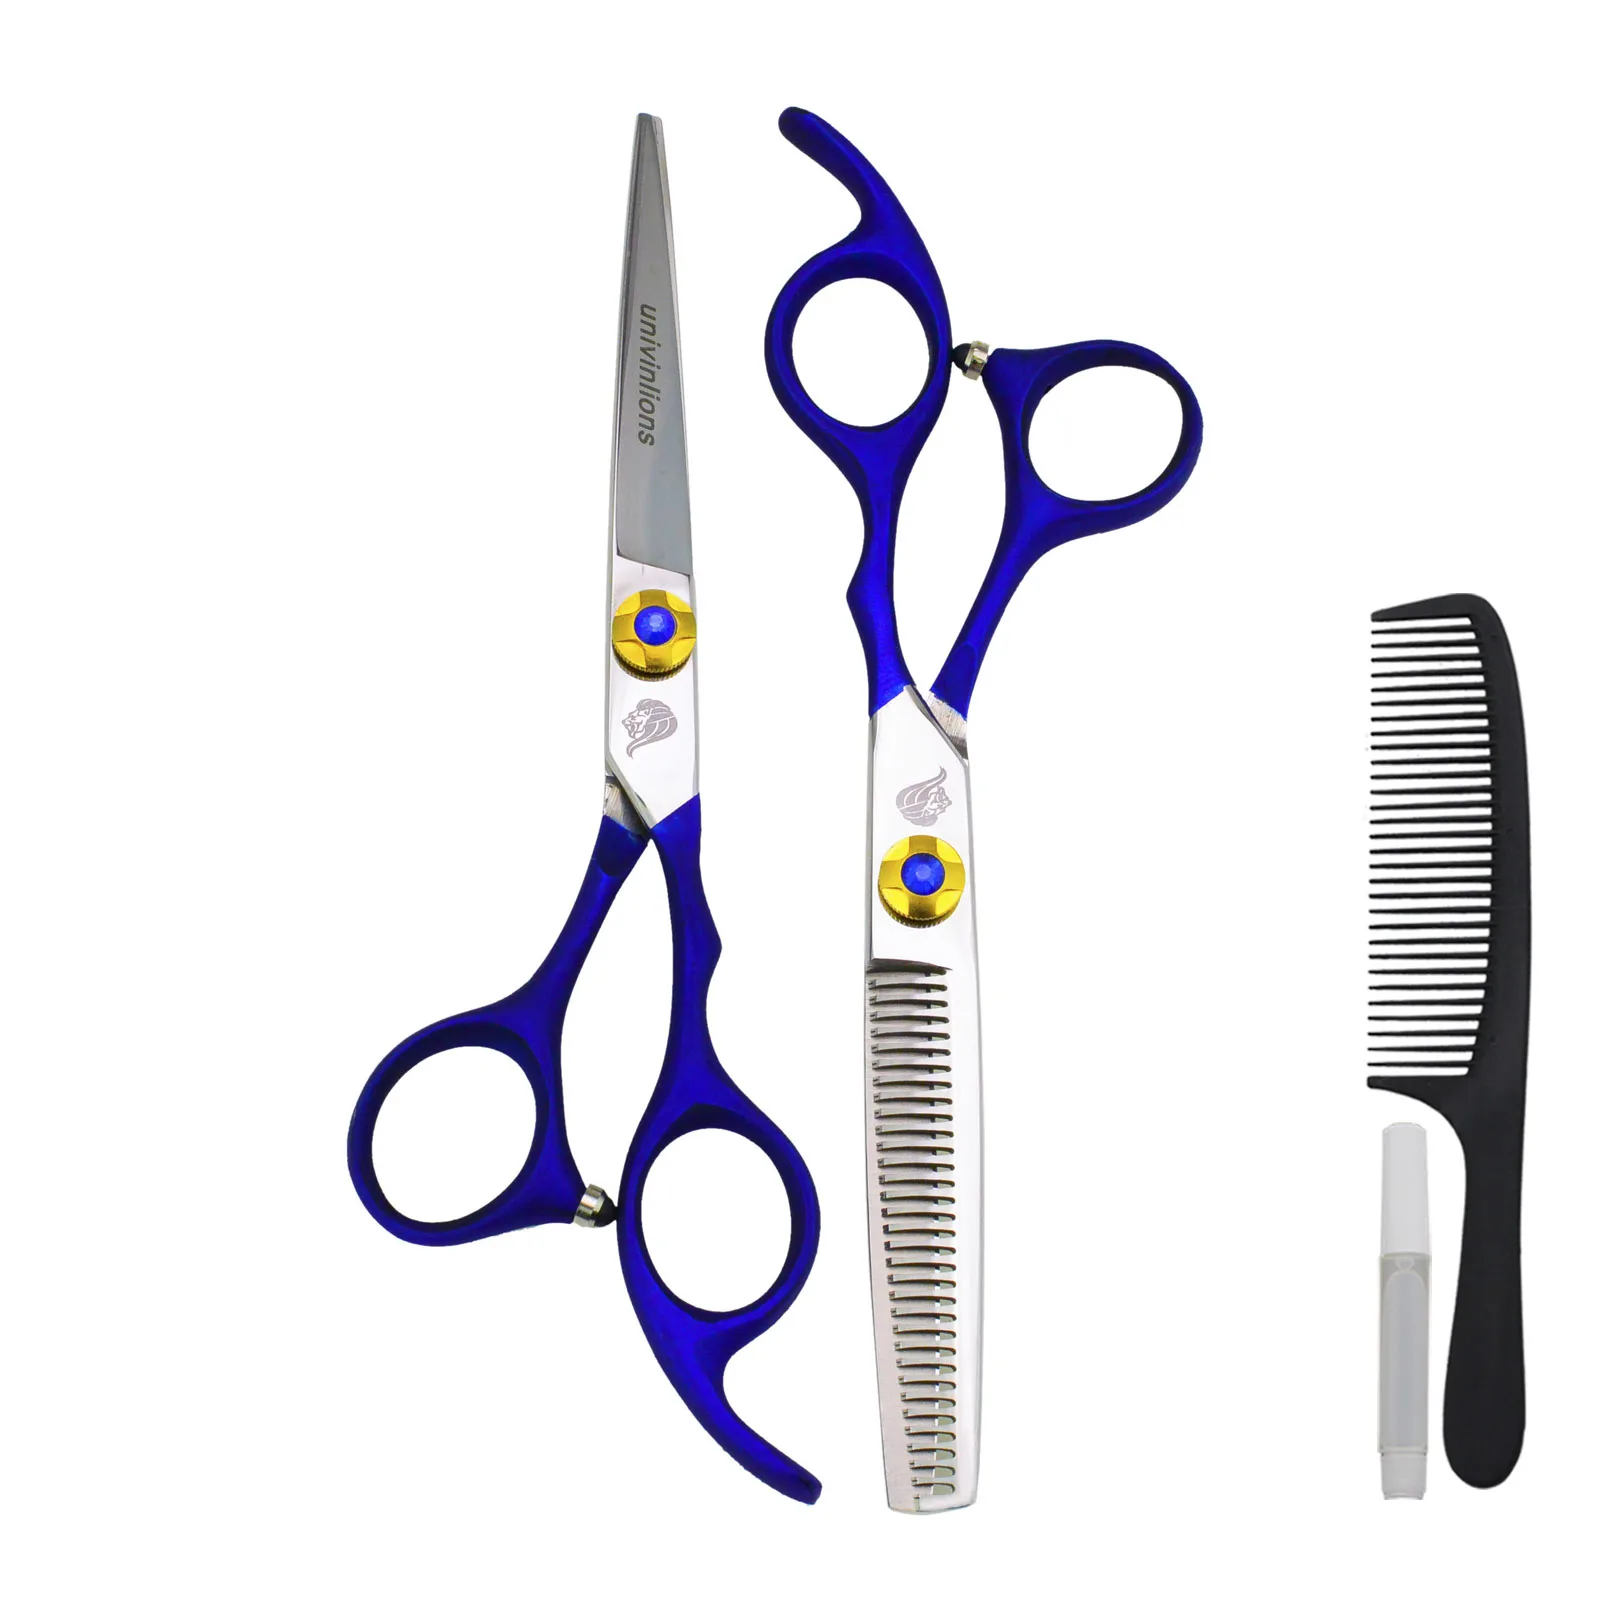 

6.0 Inch Professional Hair Scissors Janpanese Steel Thinning Shears Hairdressing Scissors Set Barber Accessories Salon Tools